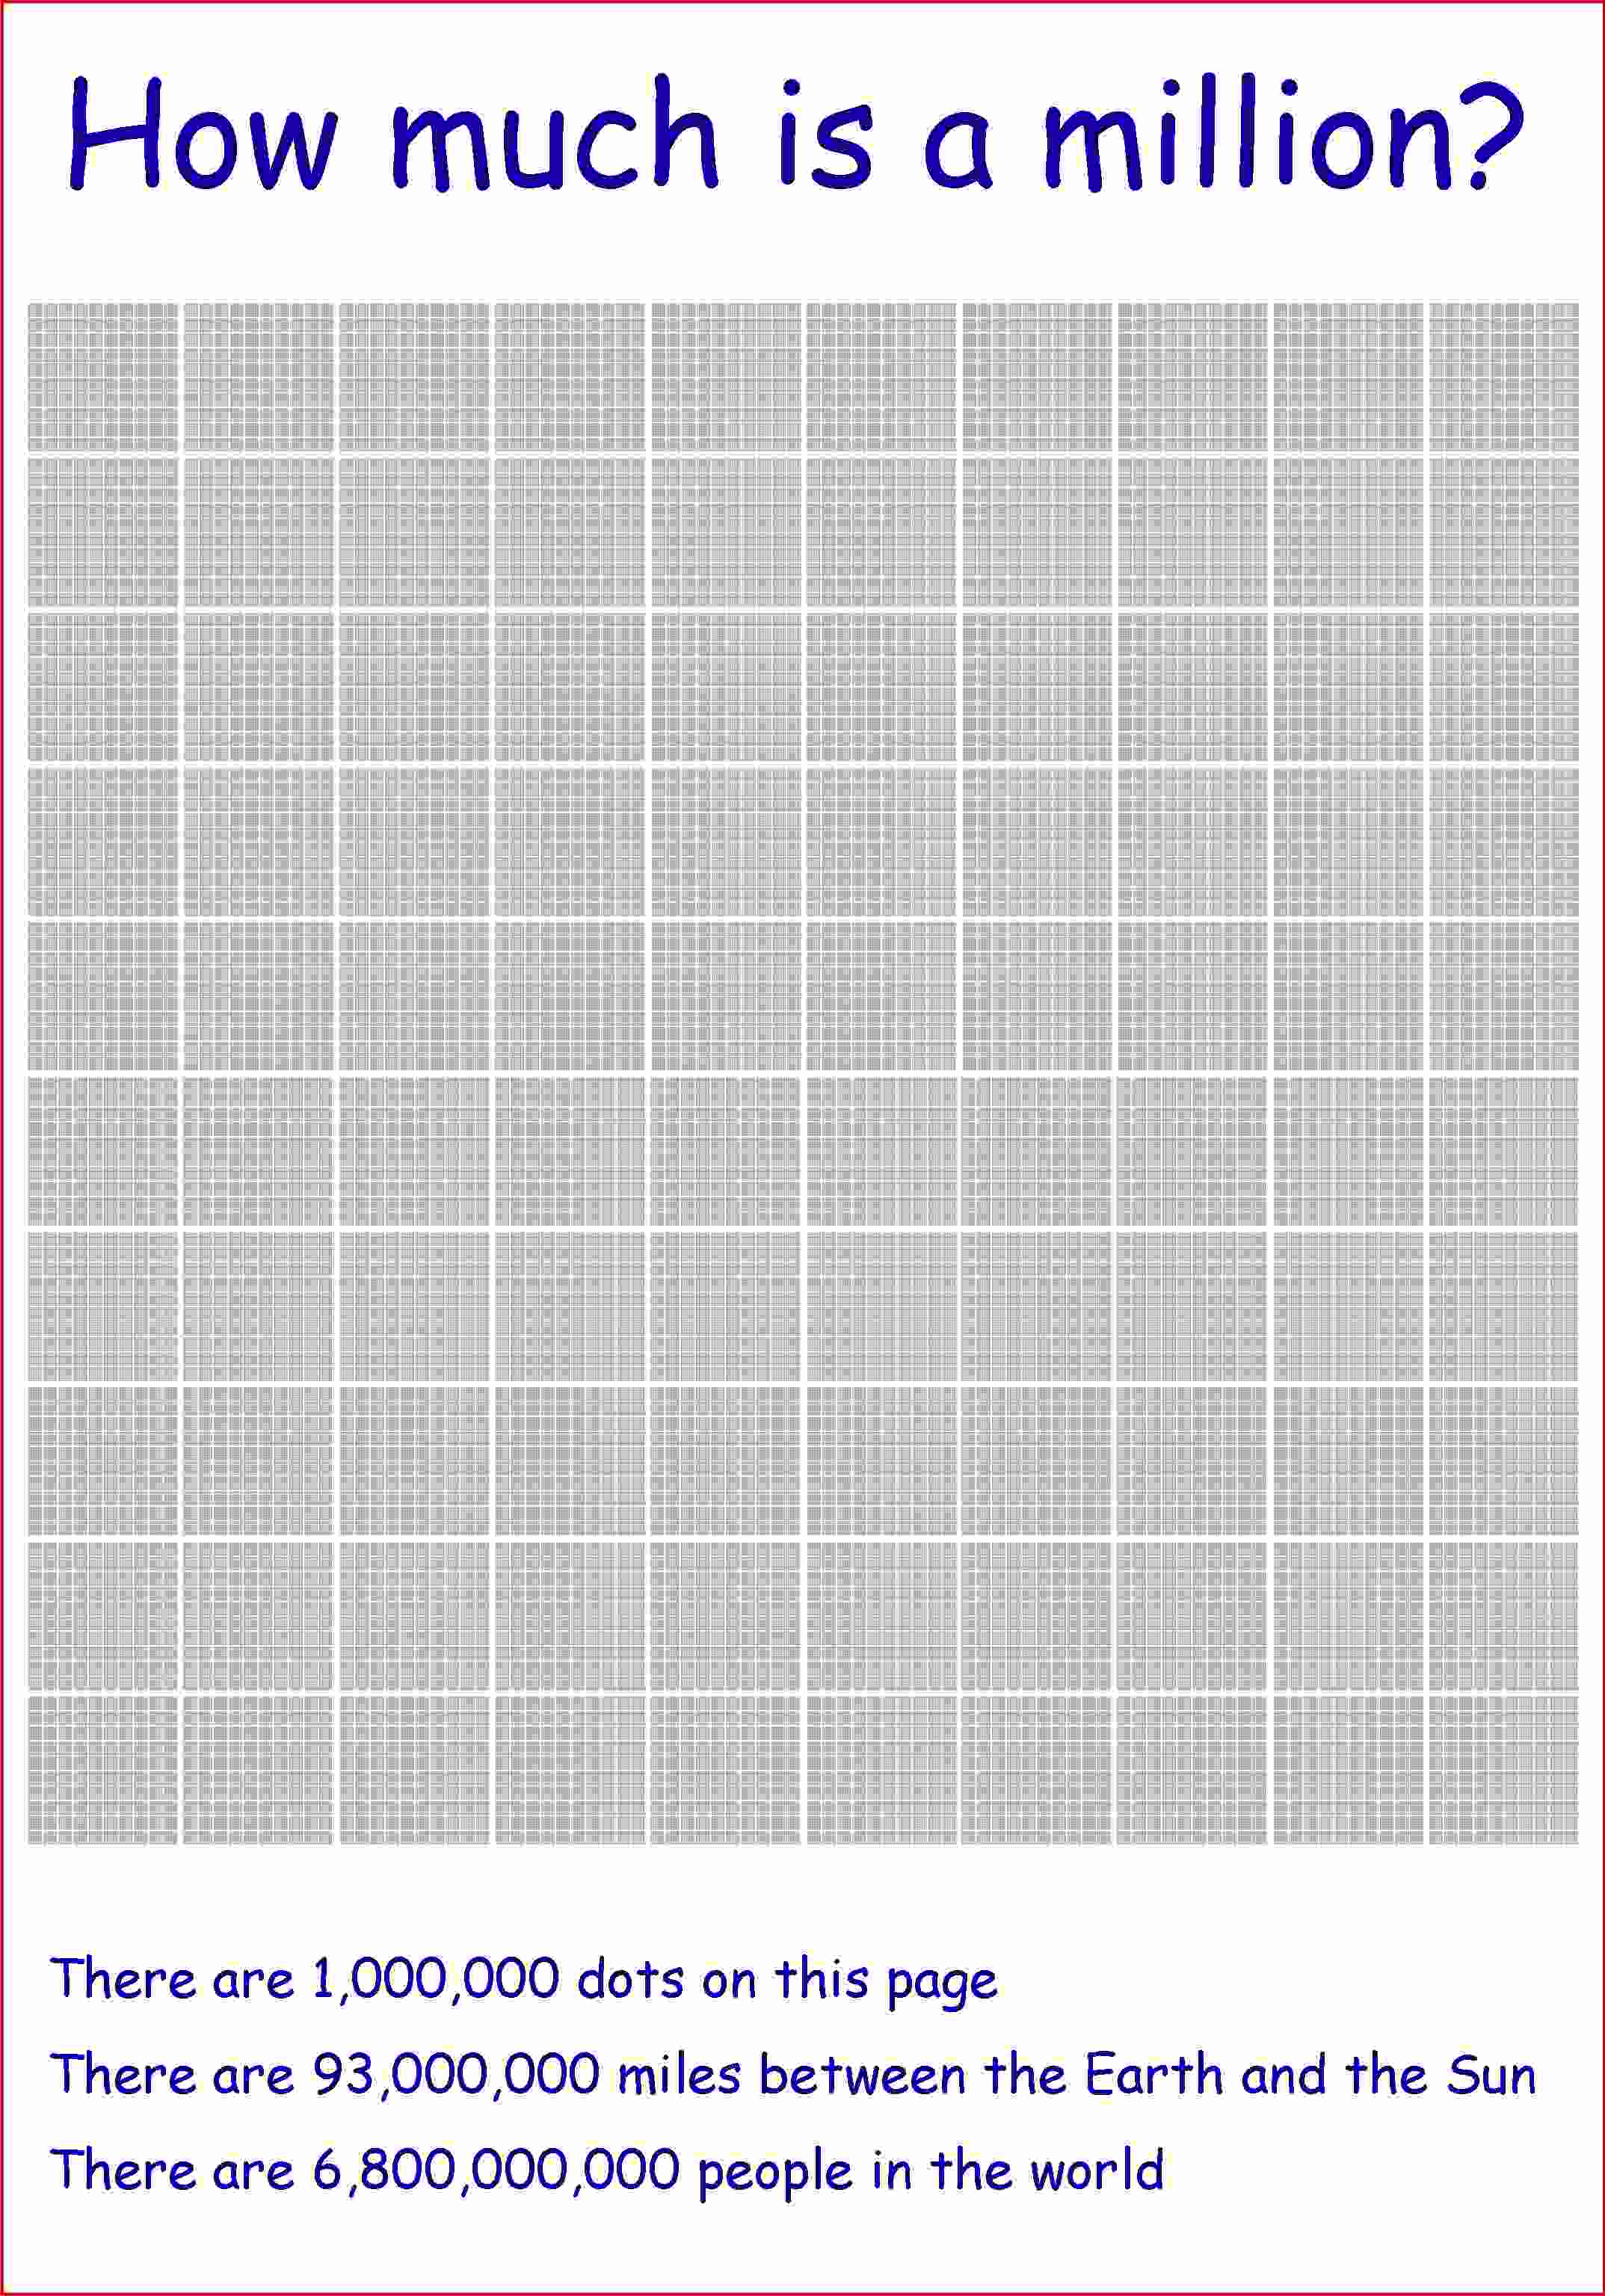 one-million-dots-poster.jpg